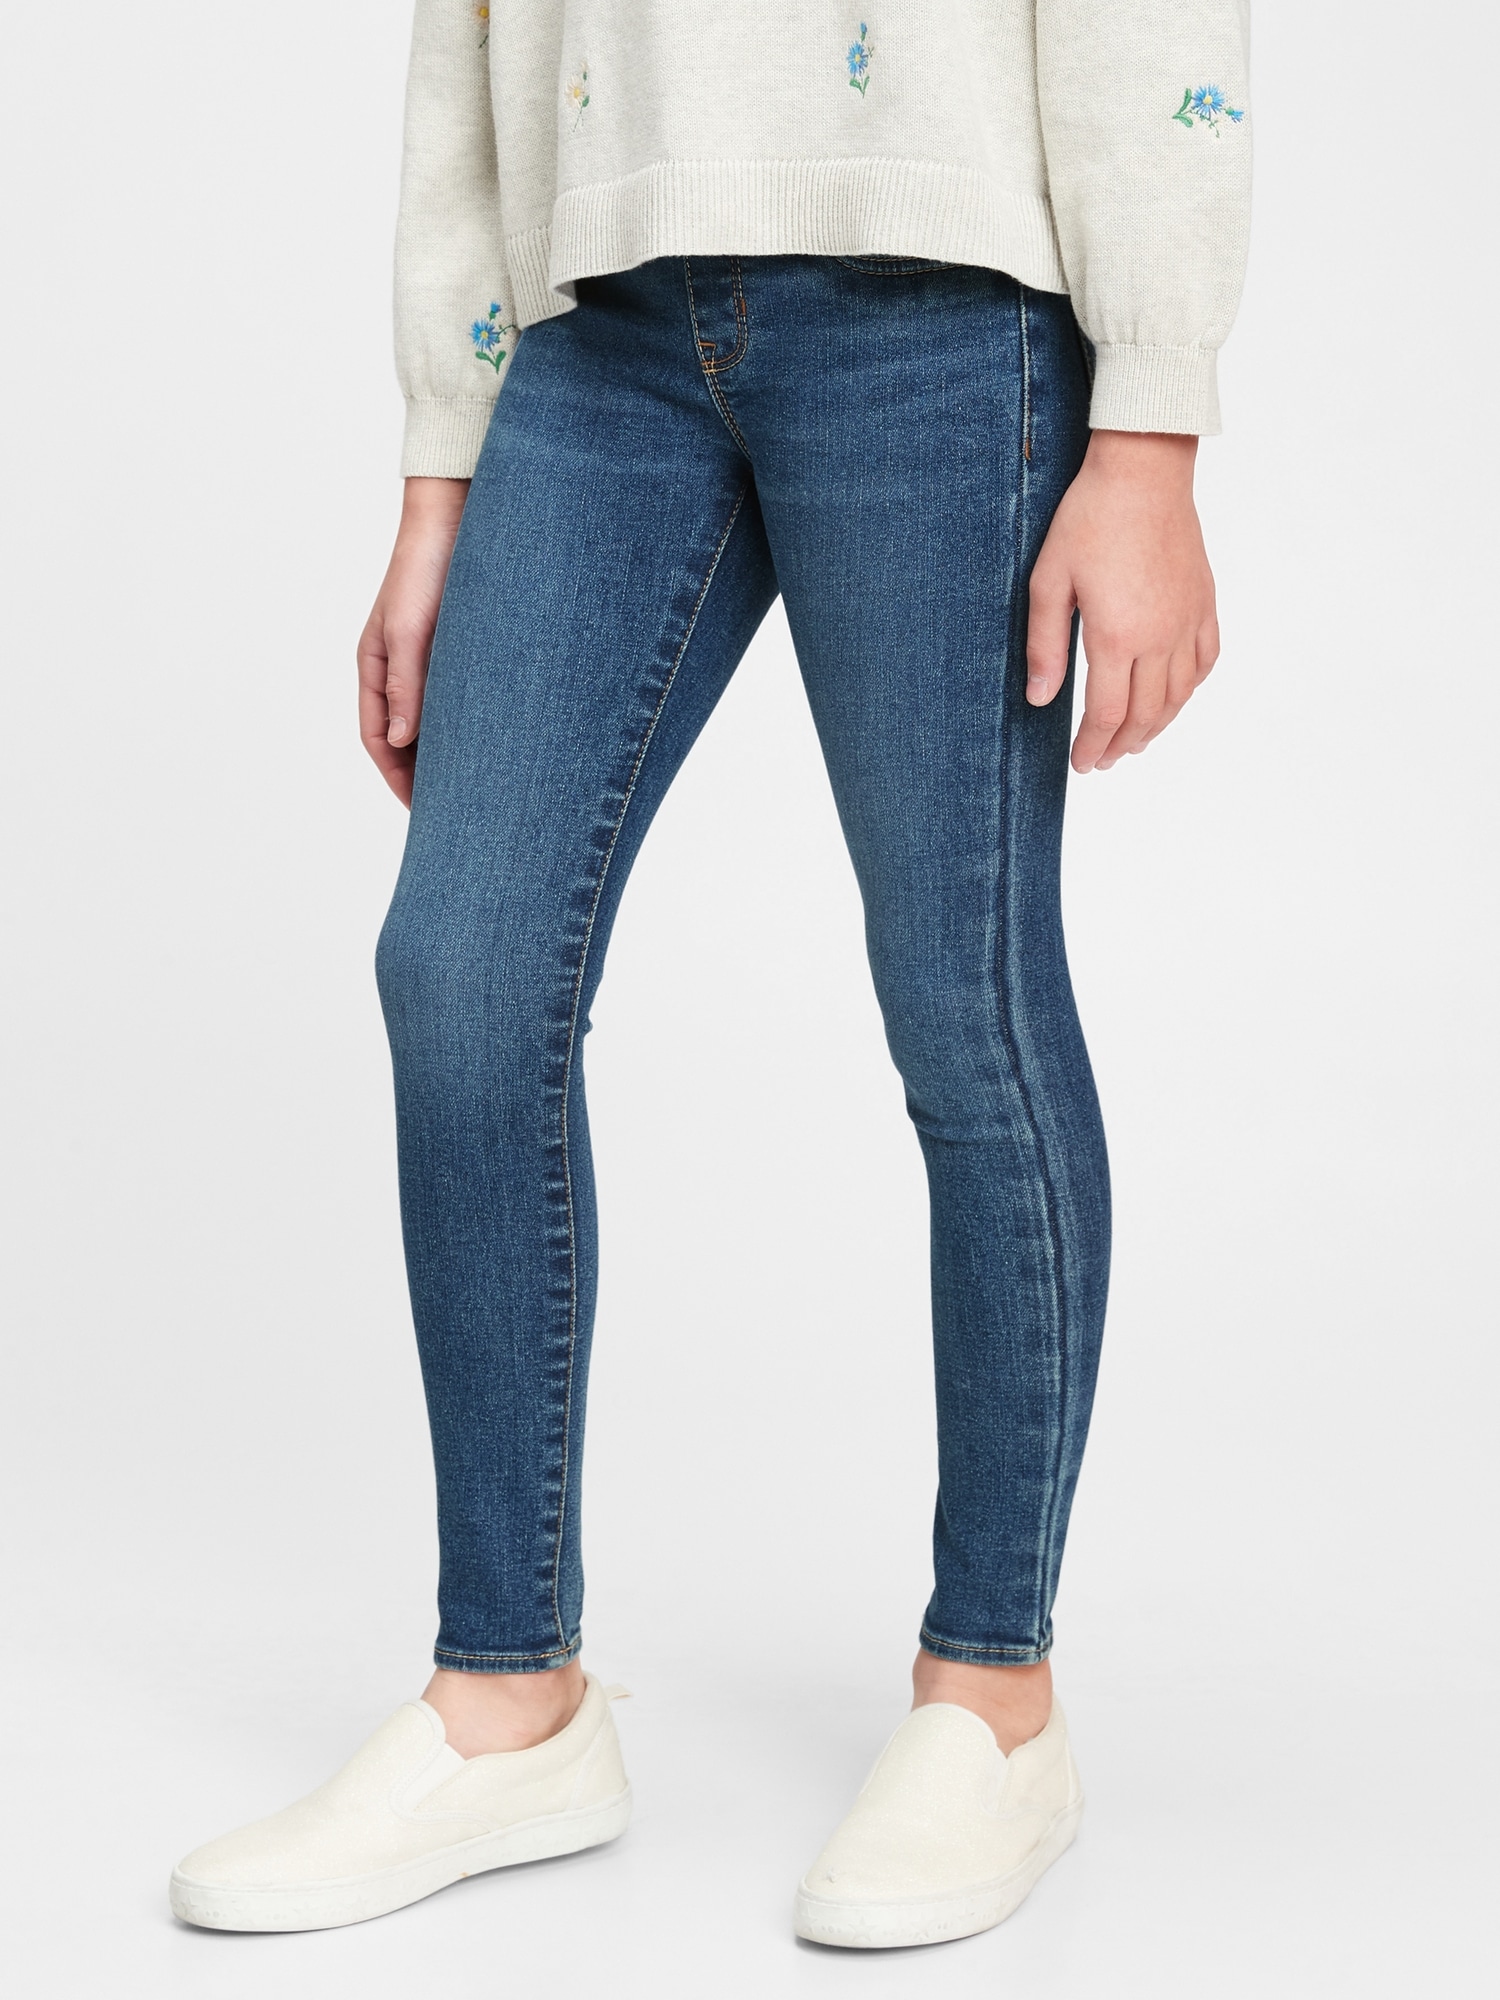 Kids Girls Stretchy Jeans Light Blue Denim Ripped Faded Skinny Pants  Jeggings | eBay